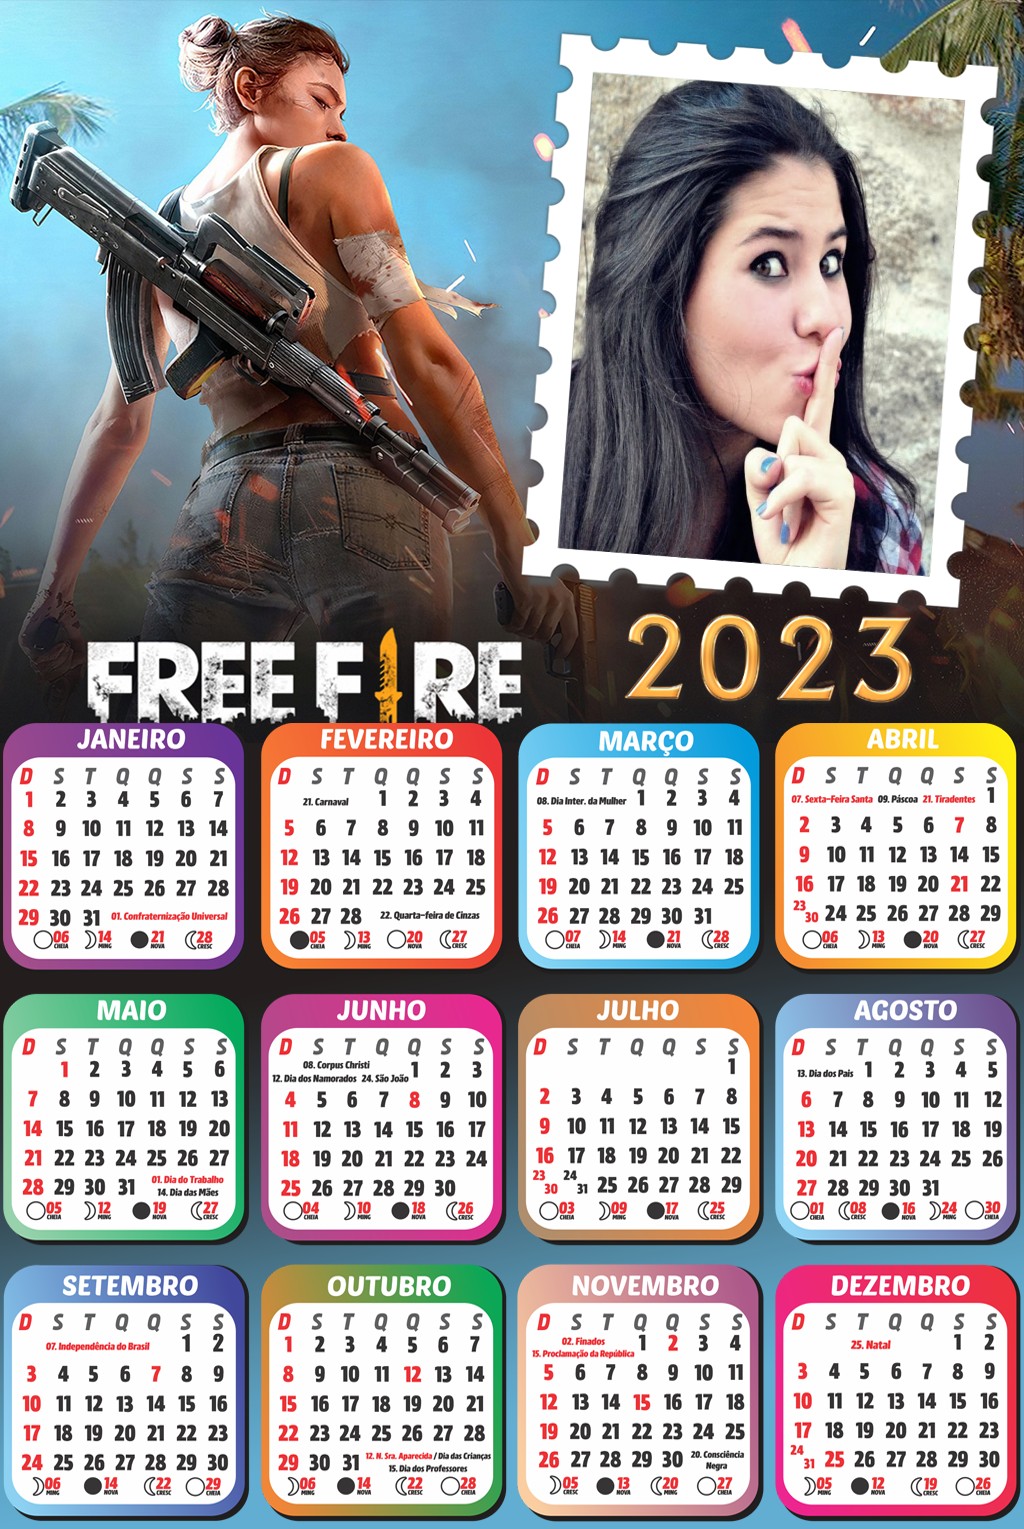 2023-free-fire